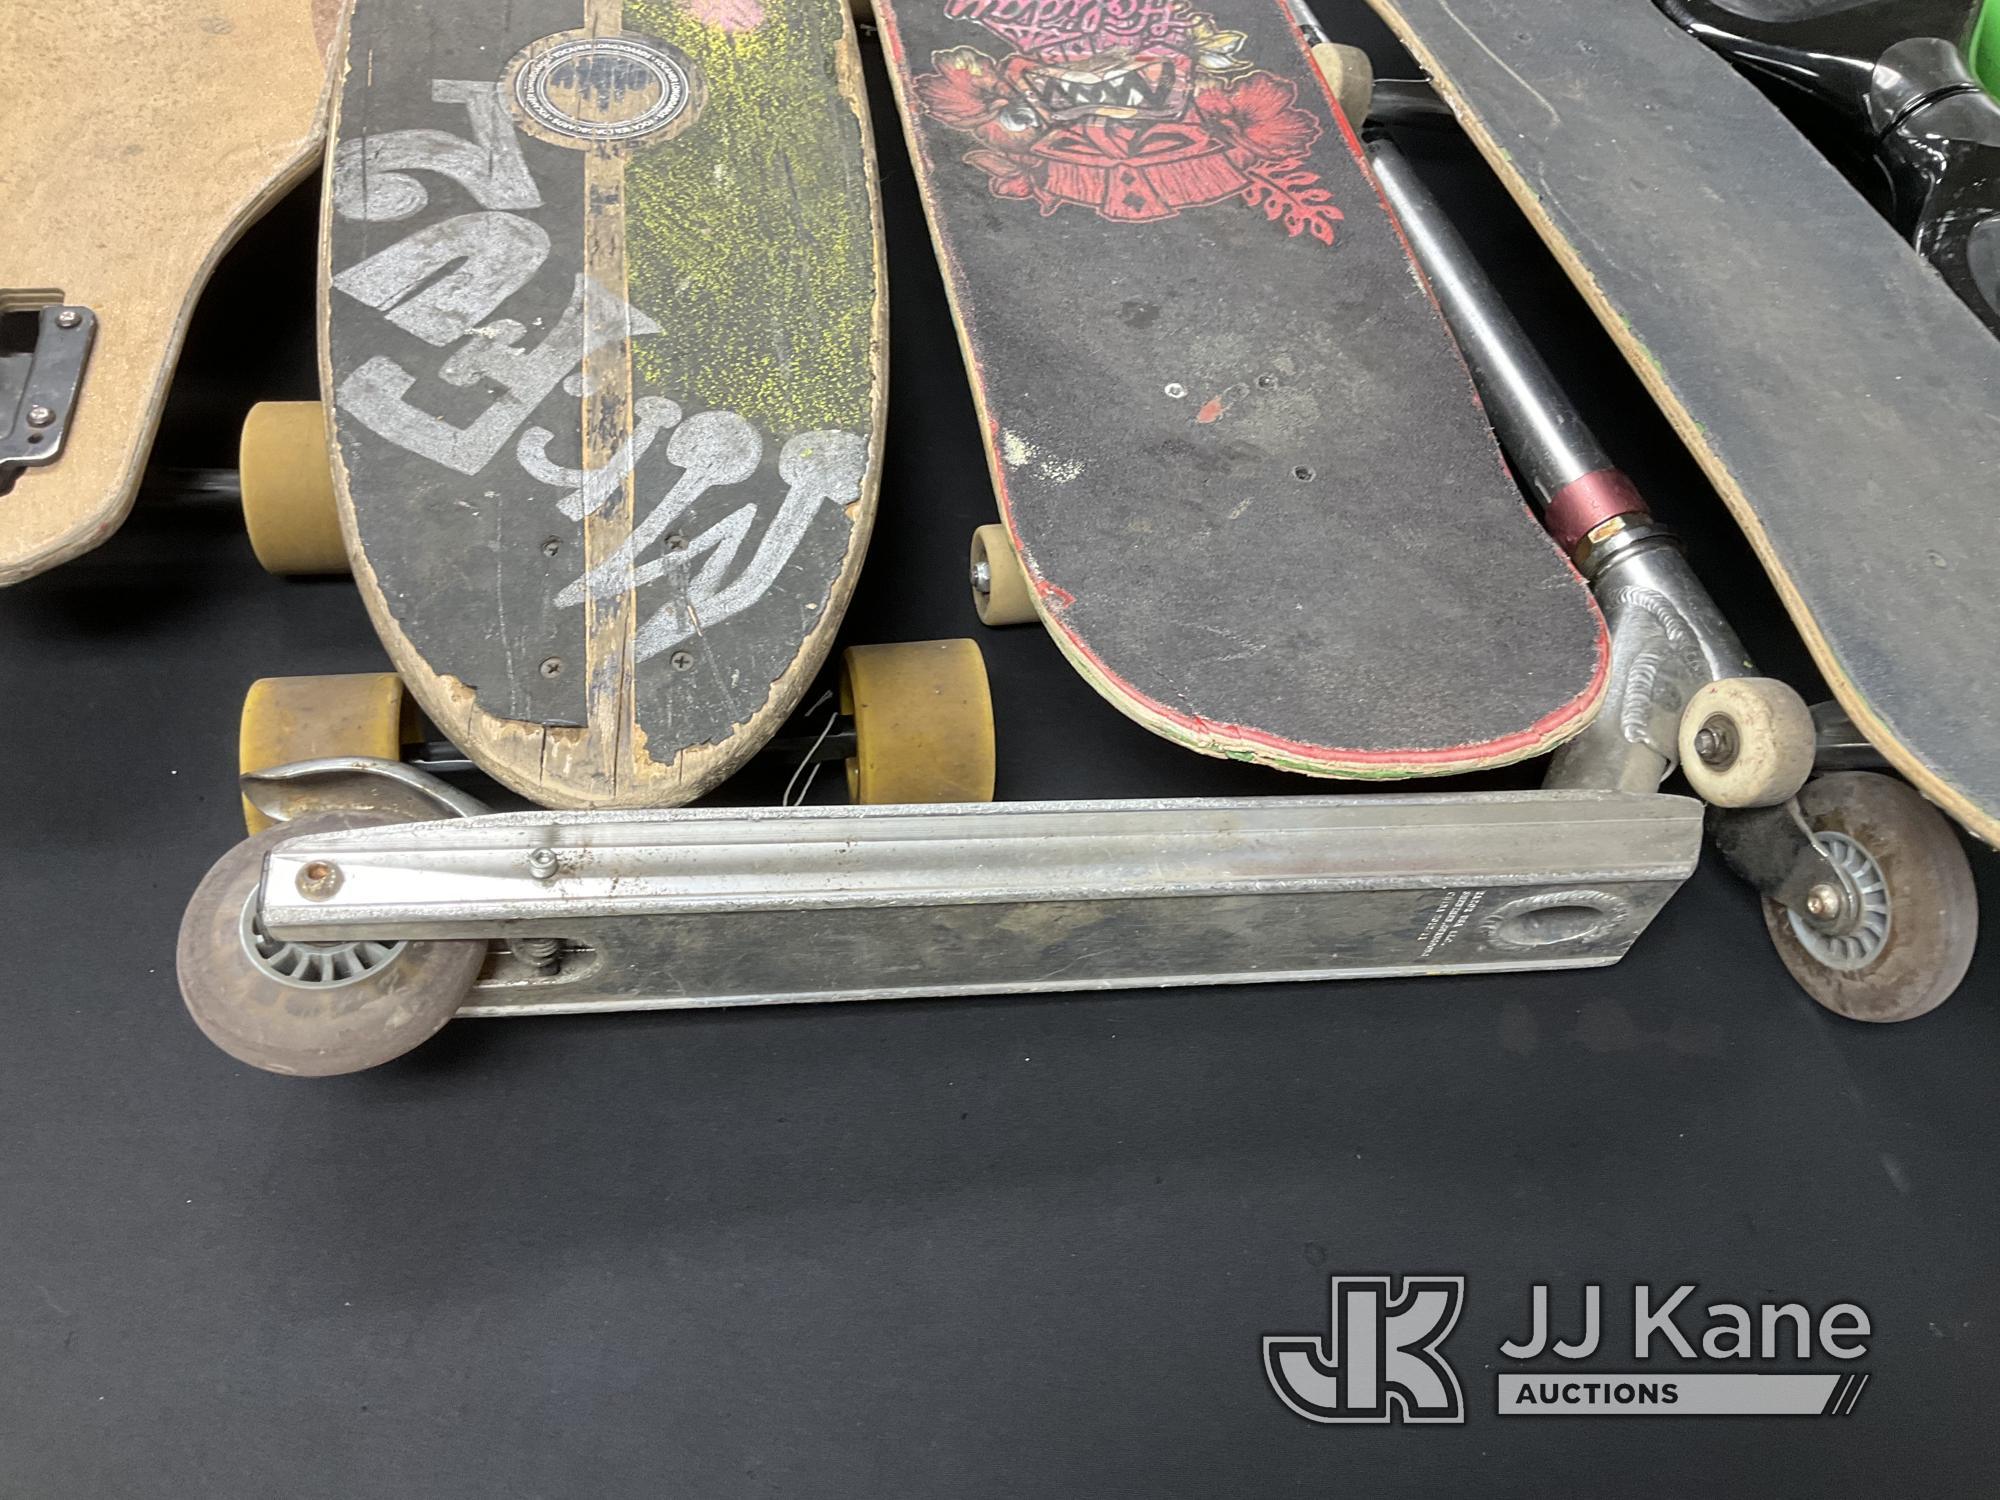 (Jurupa Valley, CA) Skateboards Used